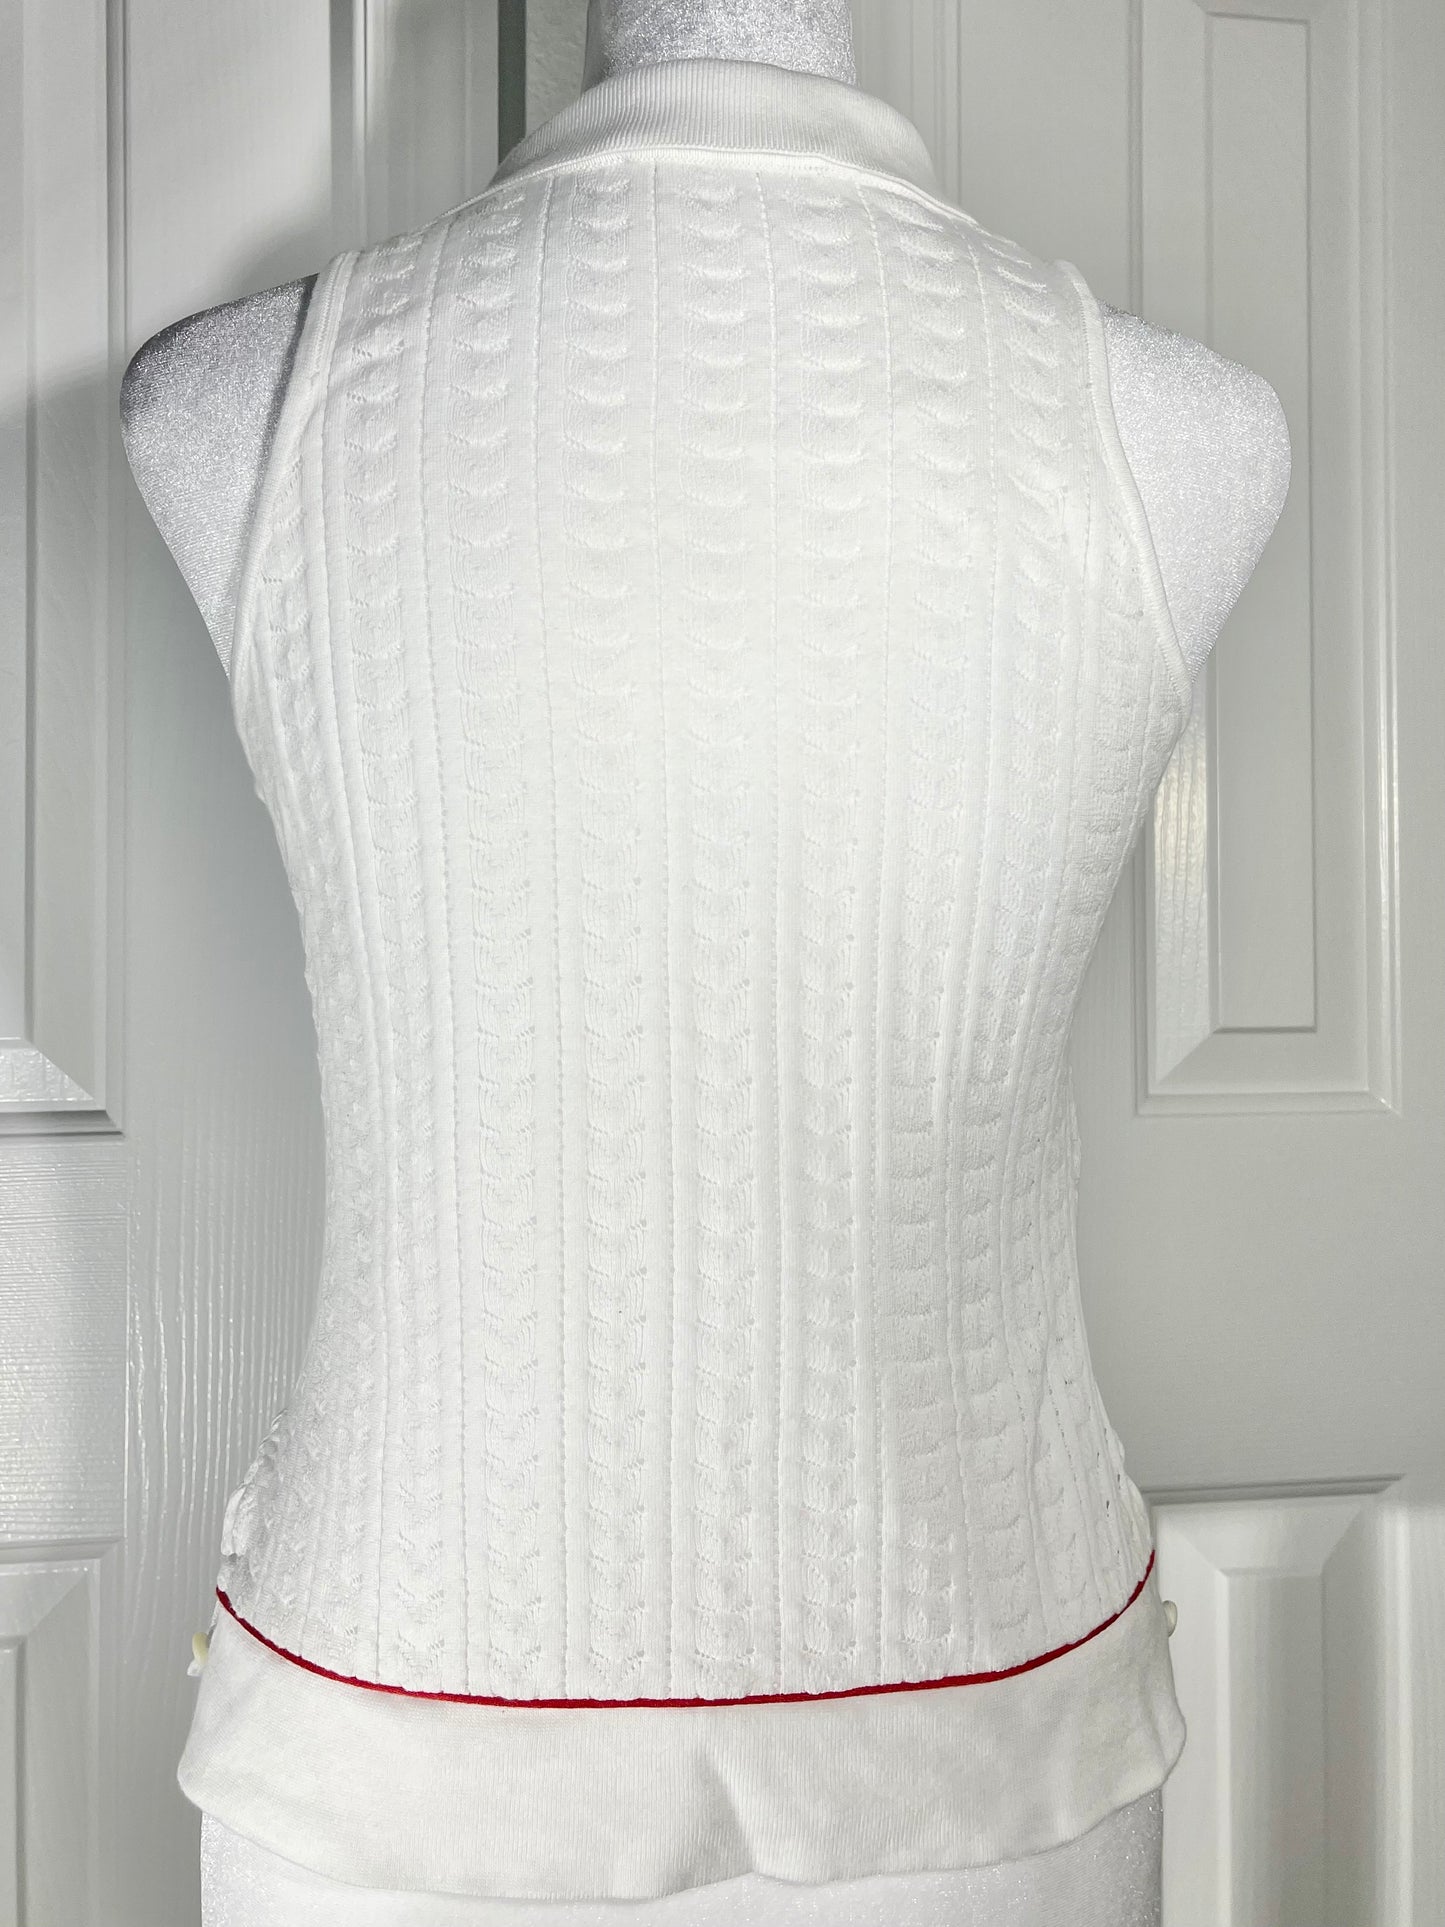 Prada Vintage White w Red Stripe Crochet Collared Tank Top - Size 38